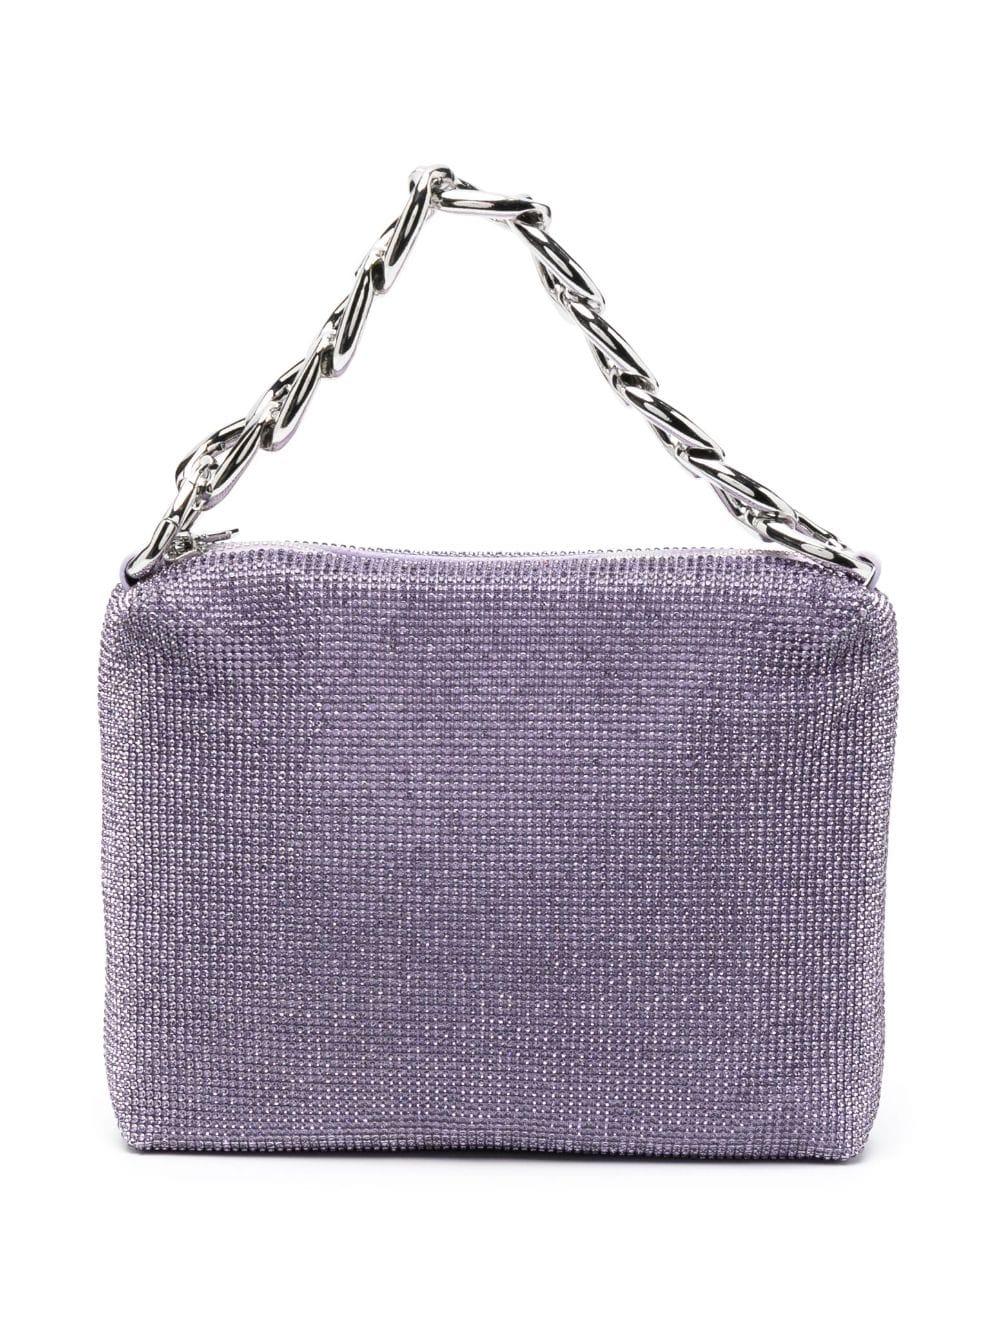 Patrizia Pepe Maxichain Rhinestone-embellished Tote Bag in Purple